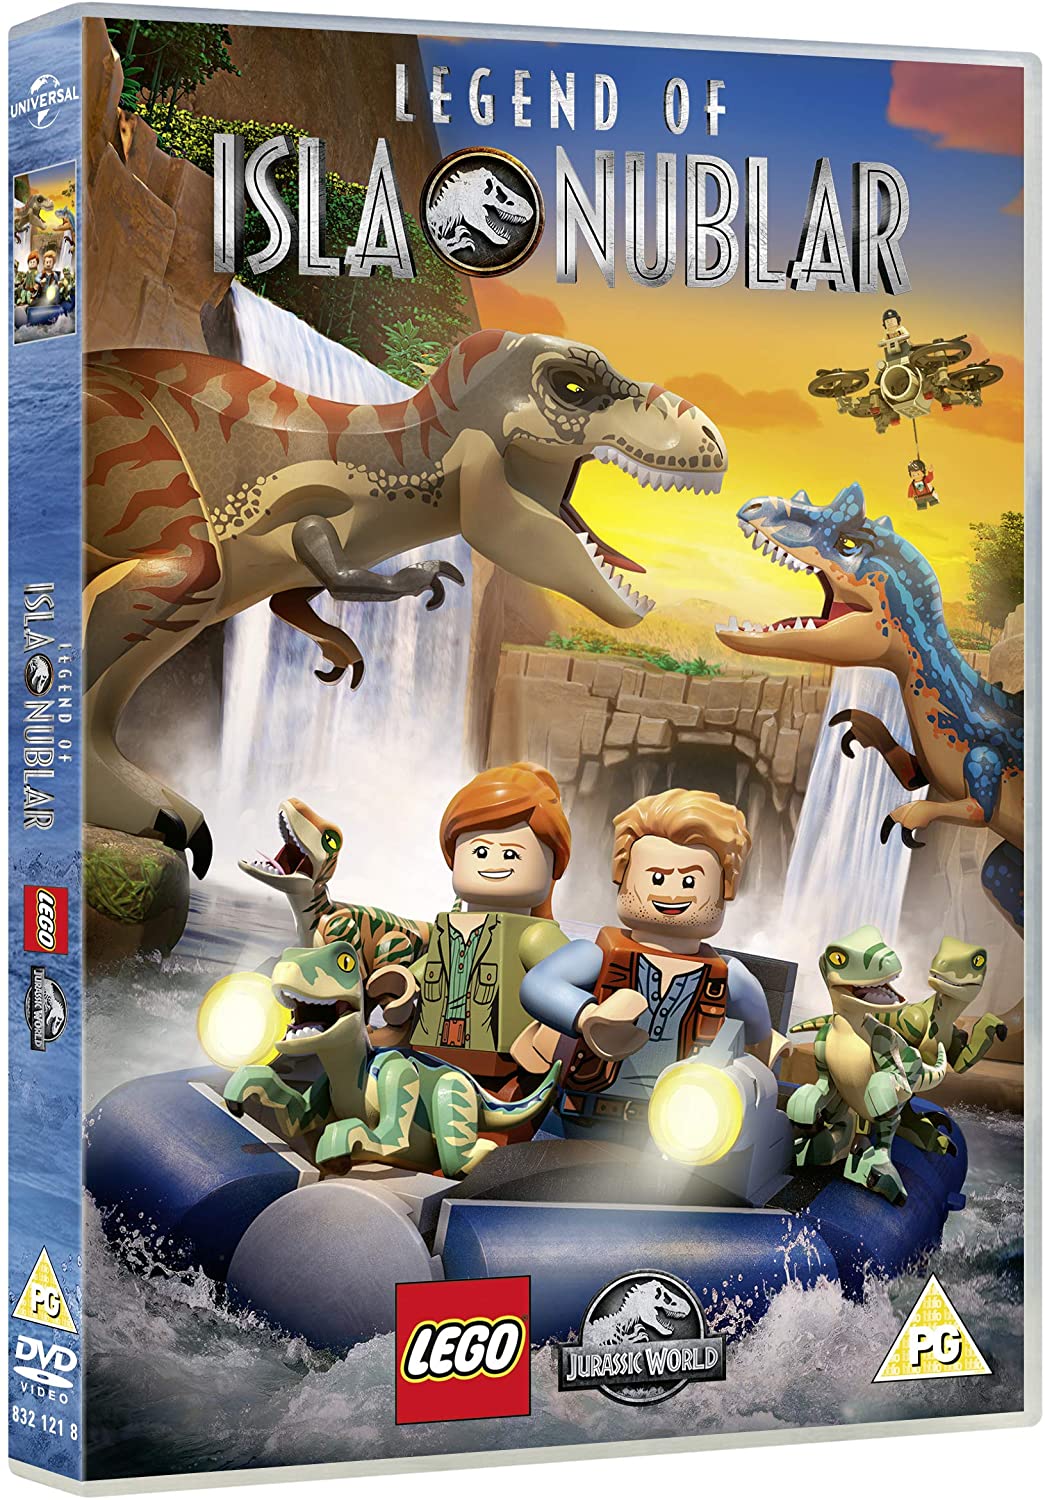 LEGO Jurassic World: Legend Of Isla Nublar - Animation [DVD]